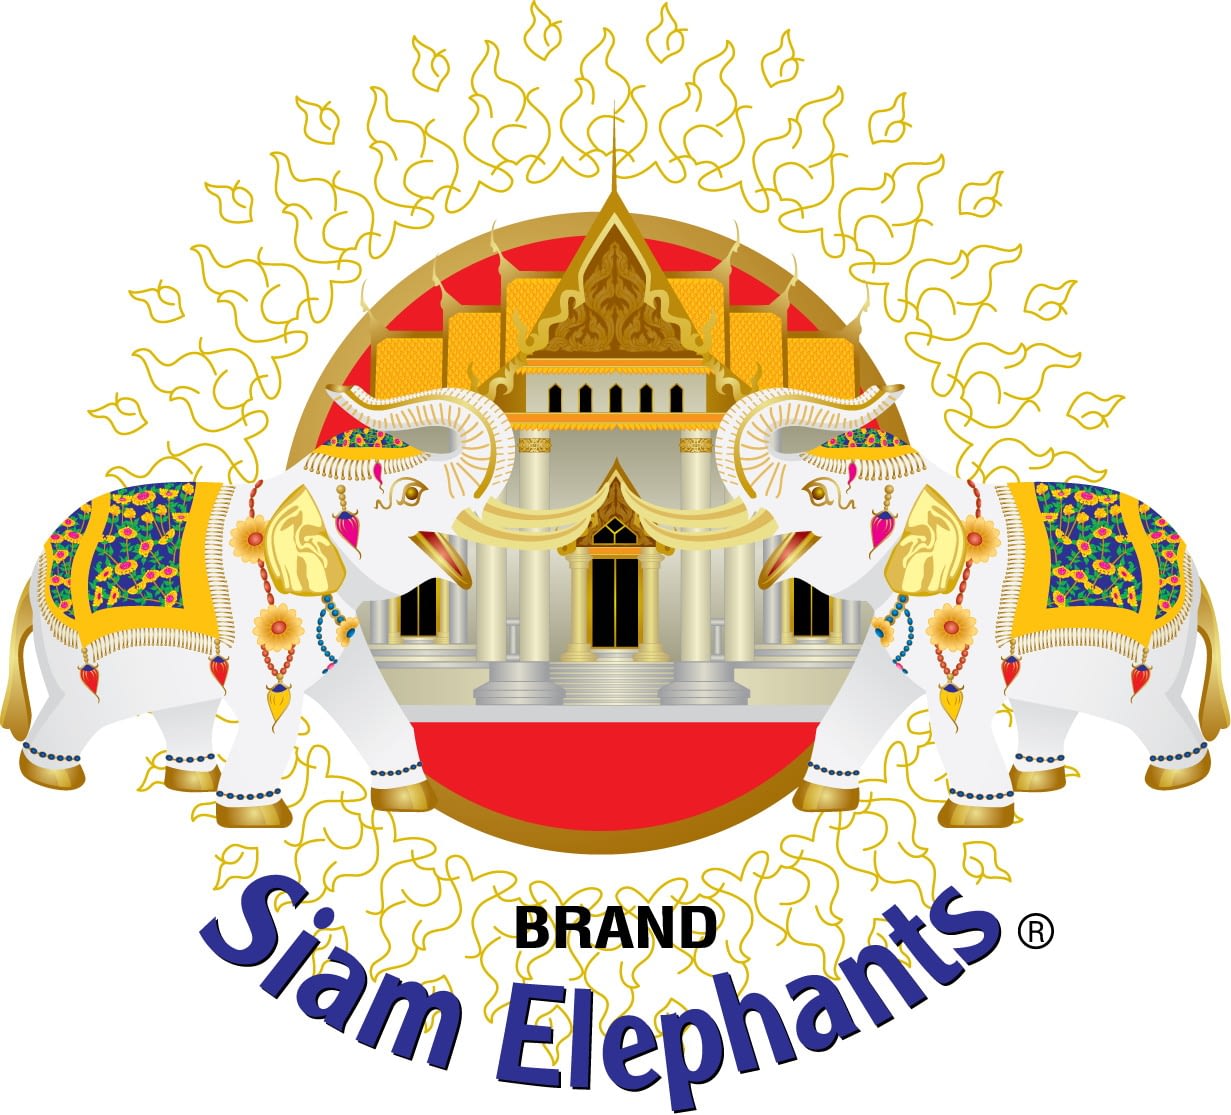 Siam Elephants